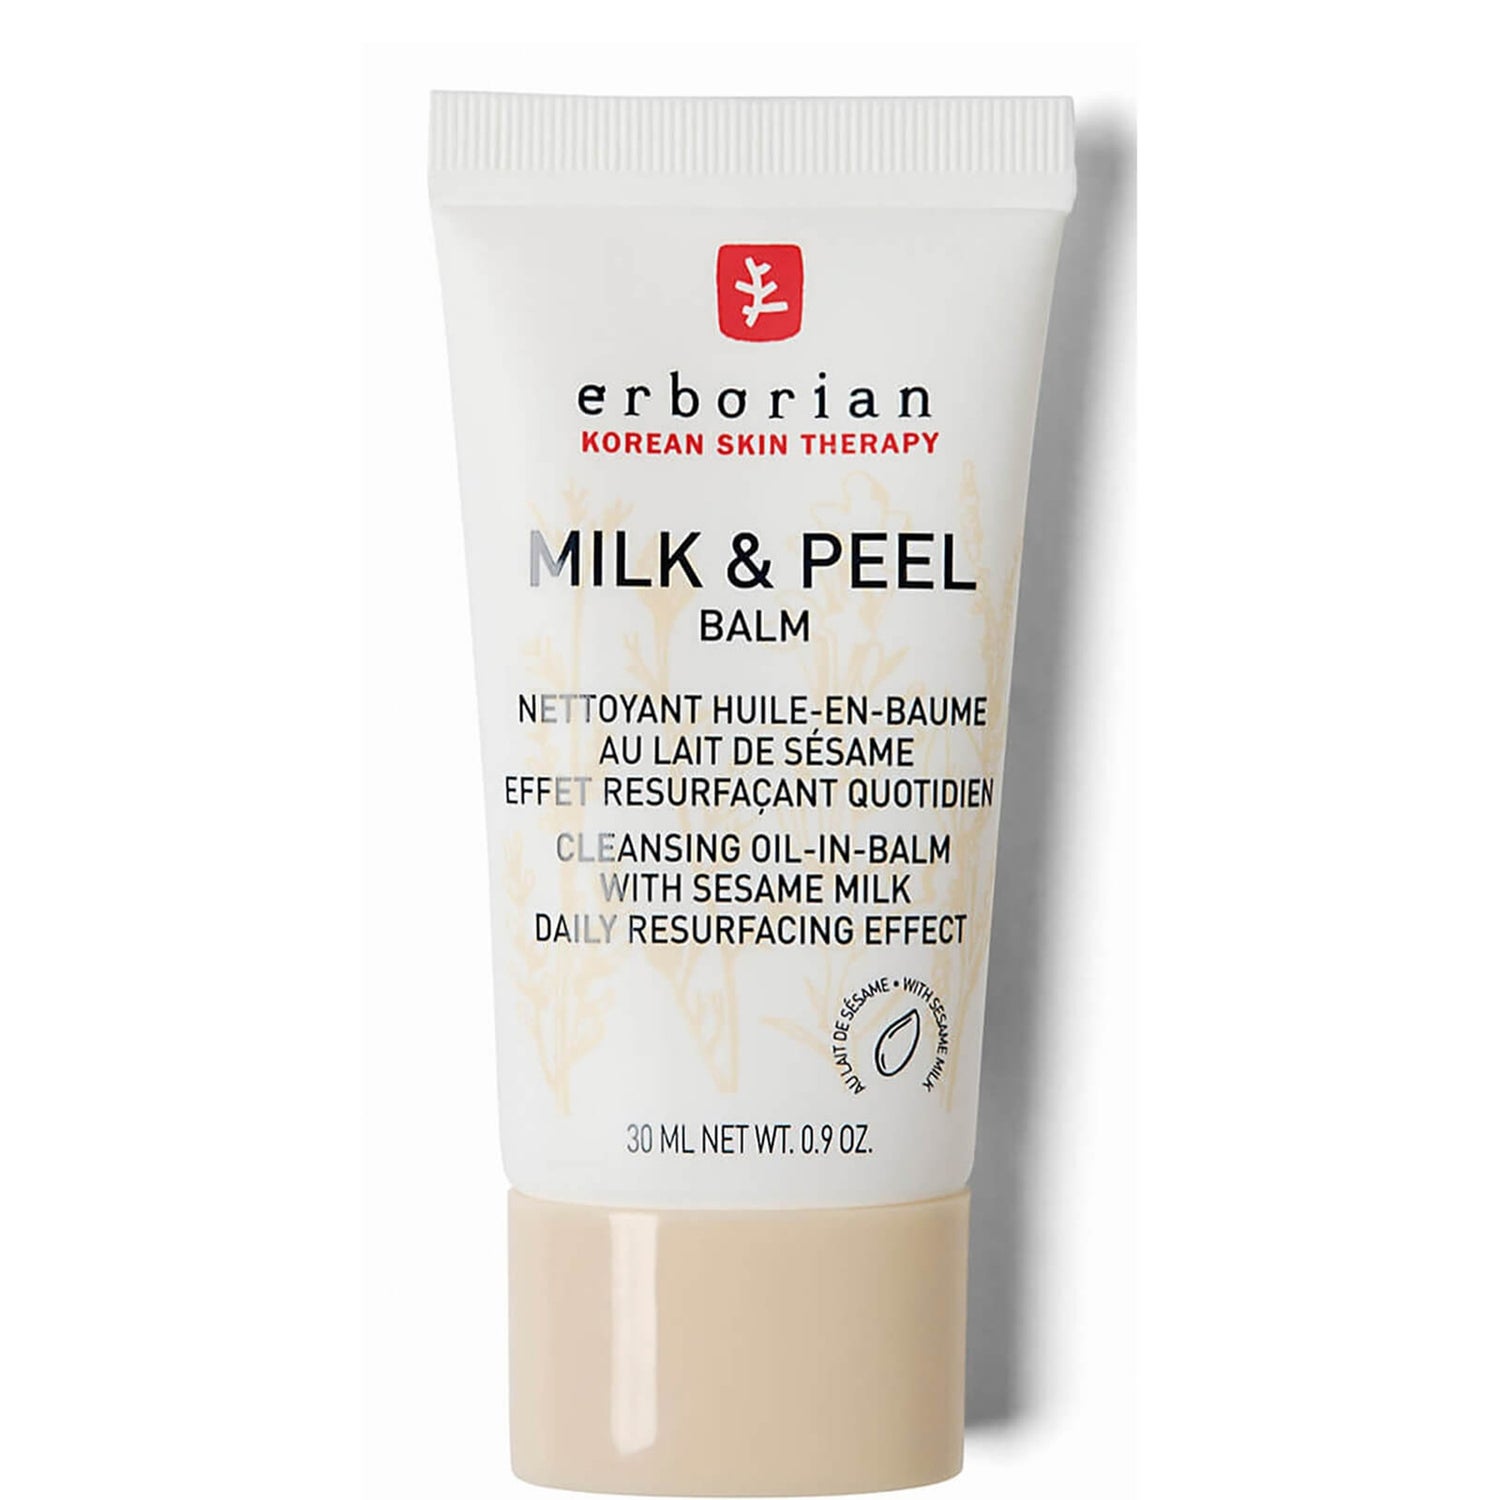 Balsam Milk & Peel – 30 ml